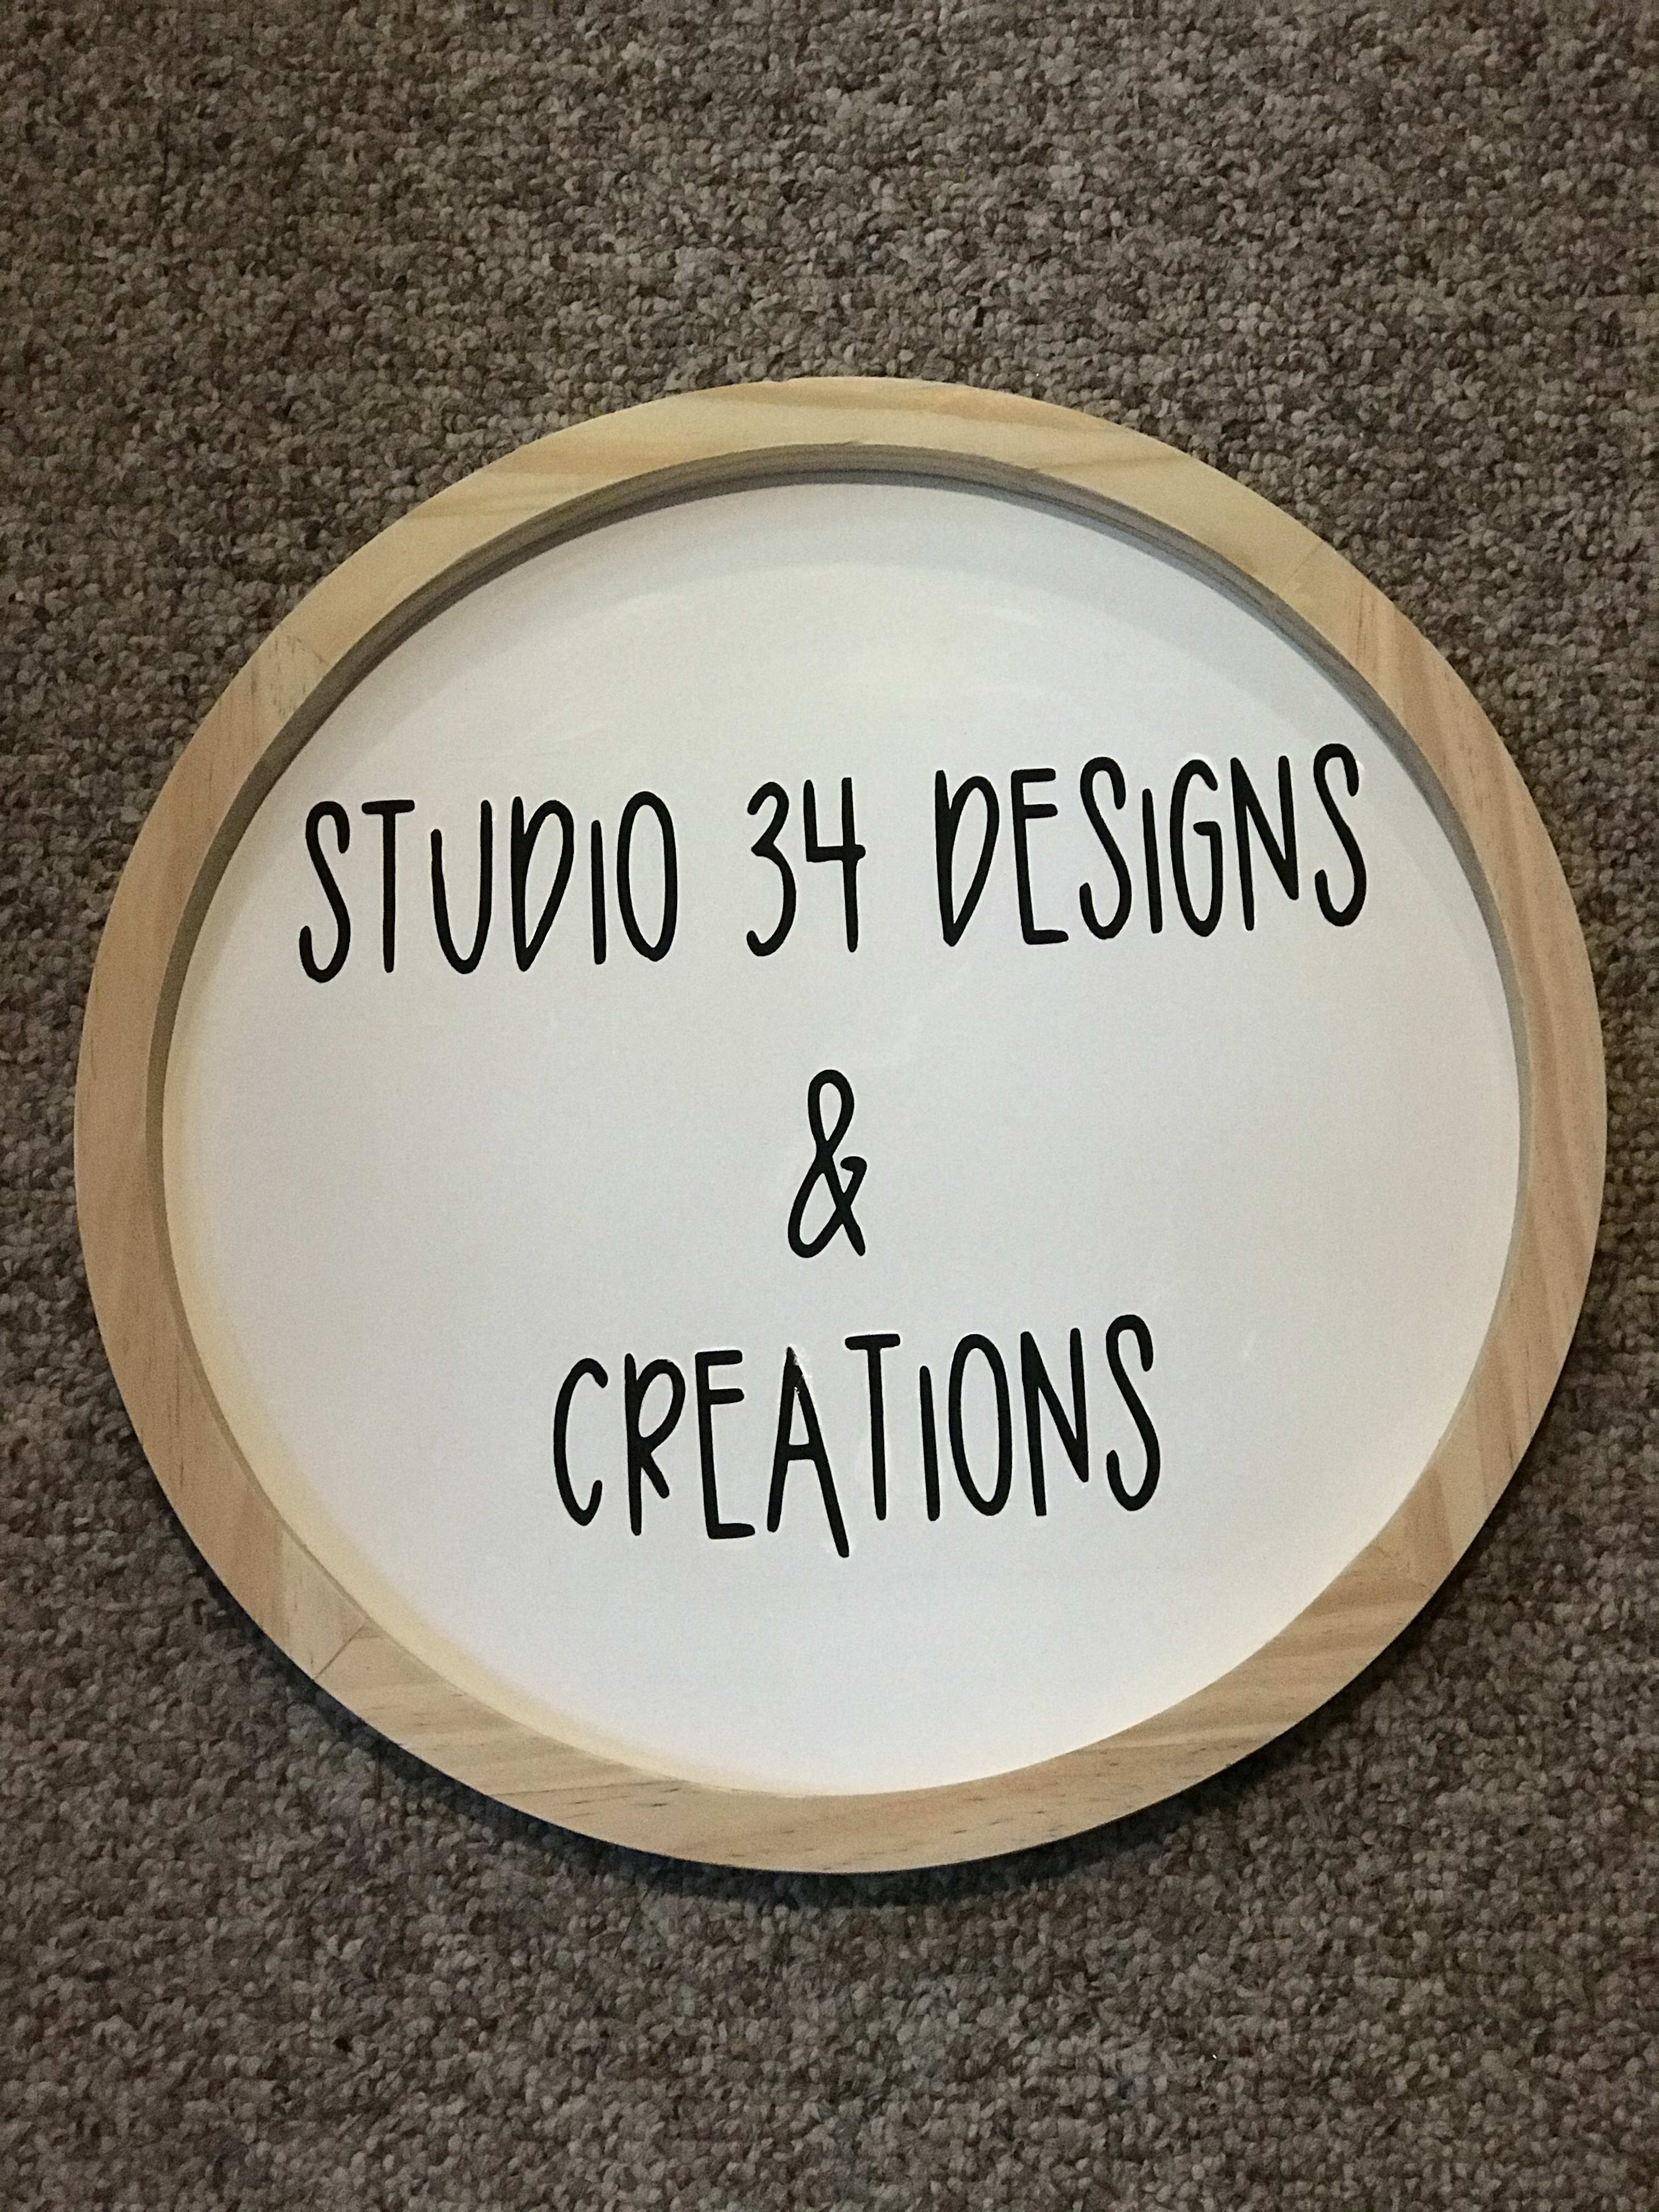 Studio 34 Designs & Creations